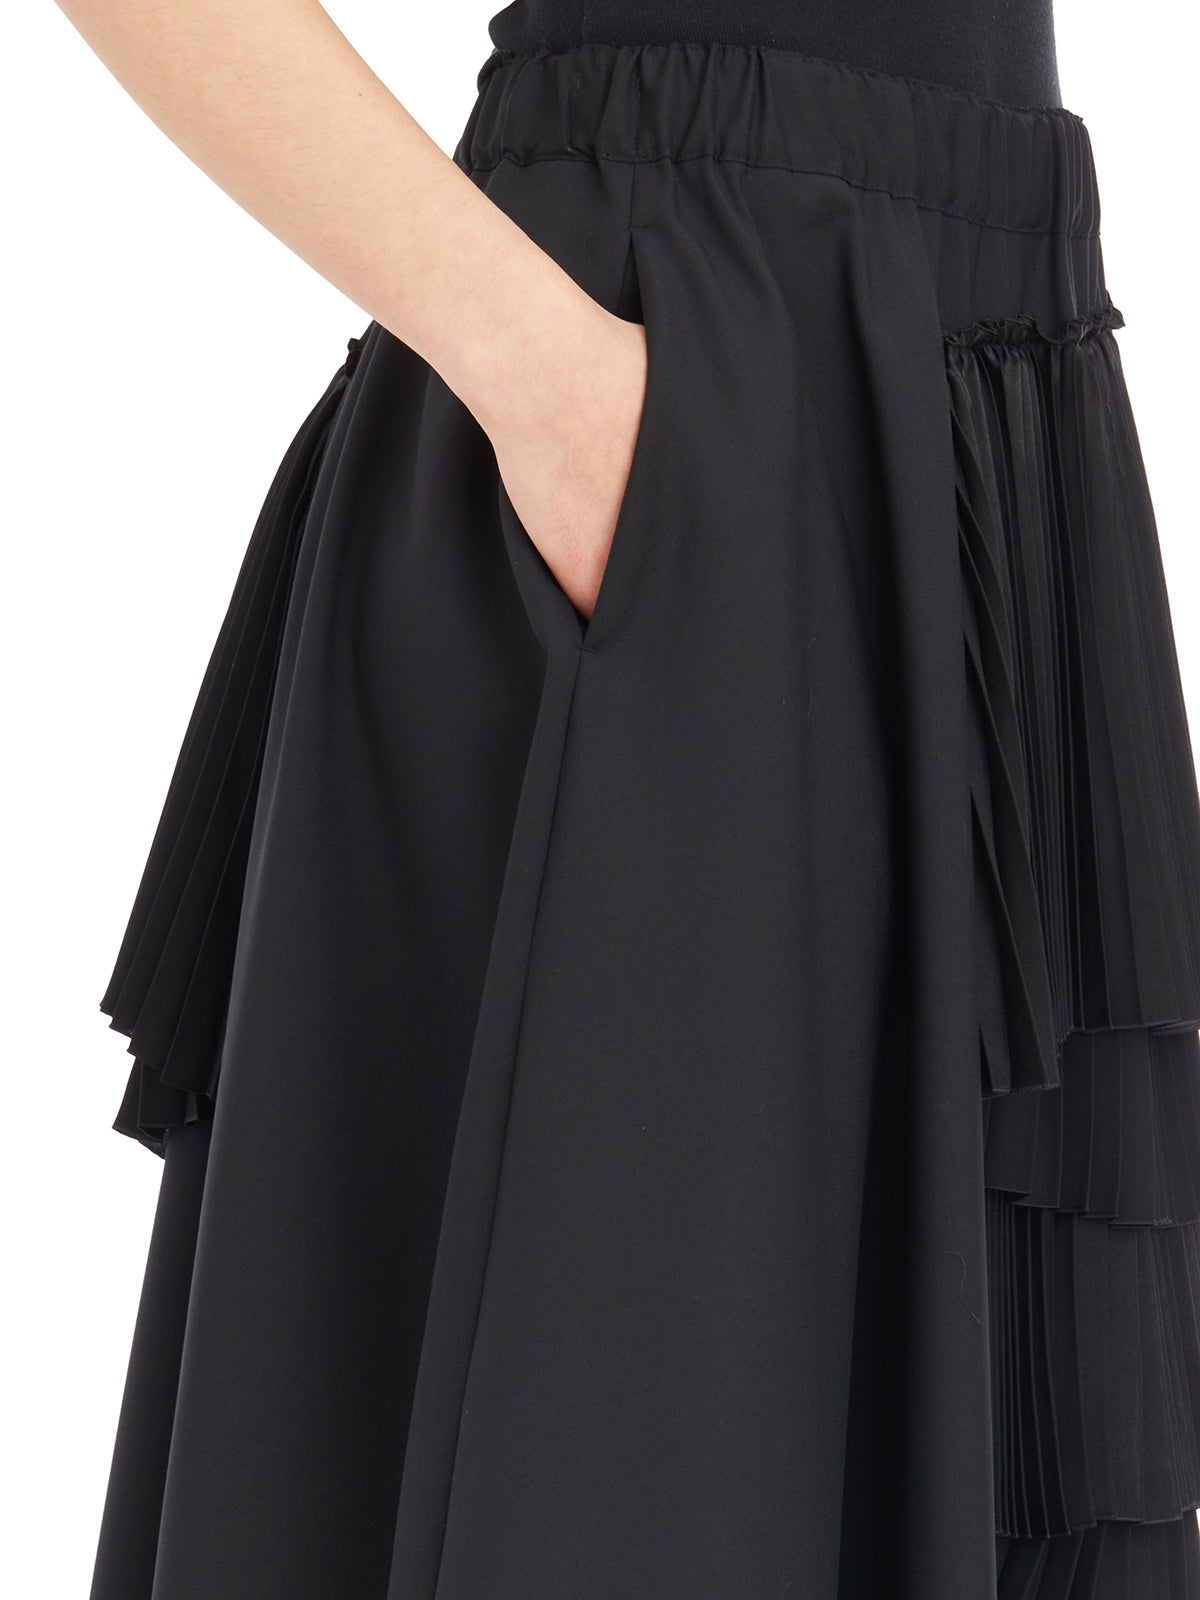 COMME DES GARÇONS Women's Black Wool Skirt with Elastic Waistband and Pleated Ruffles